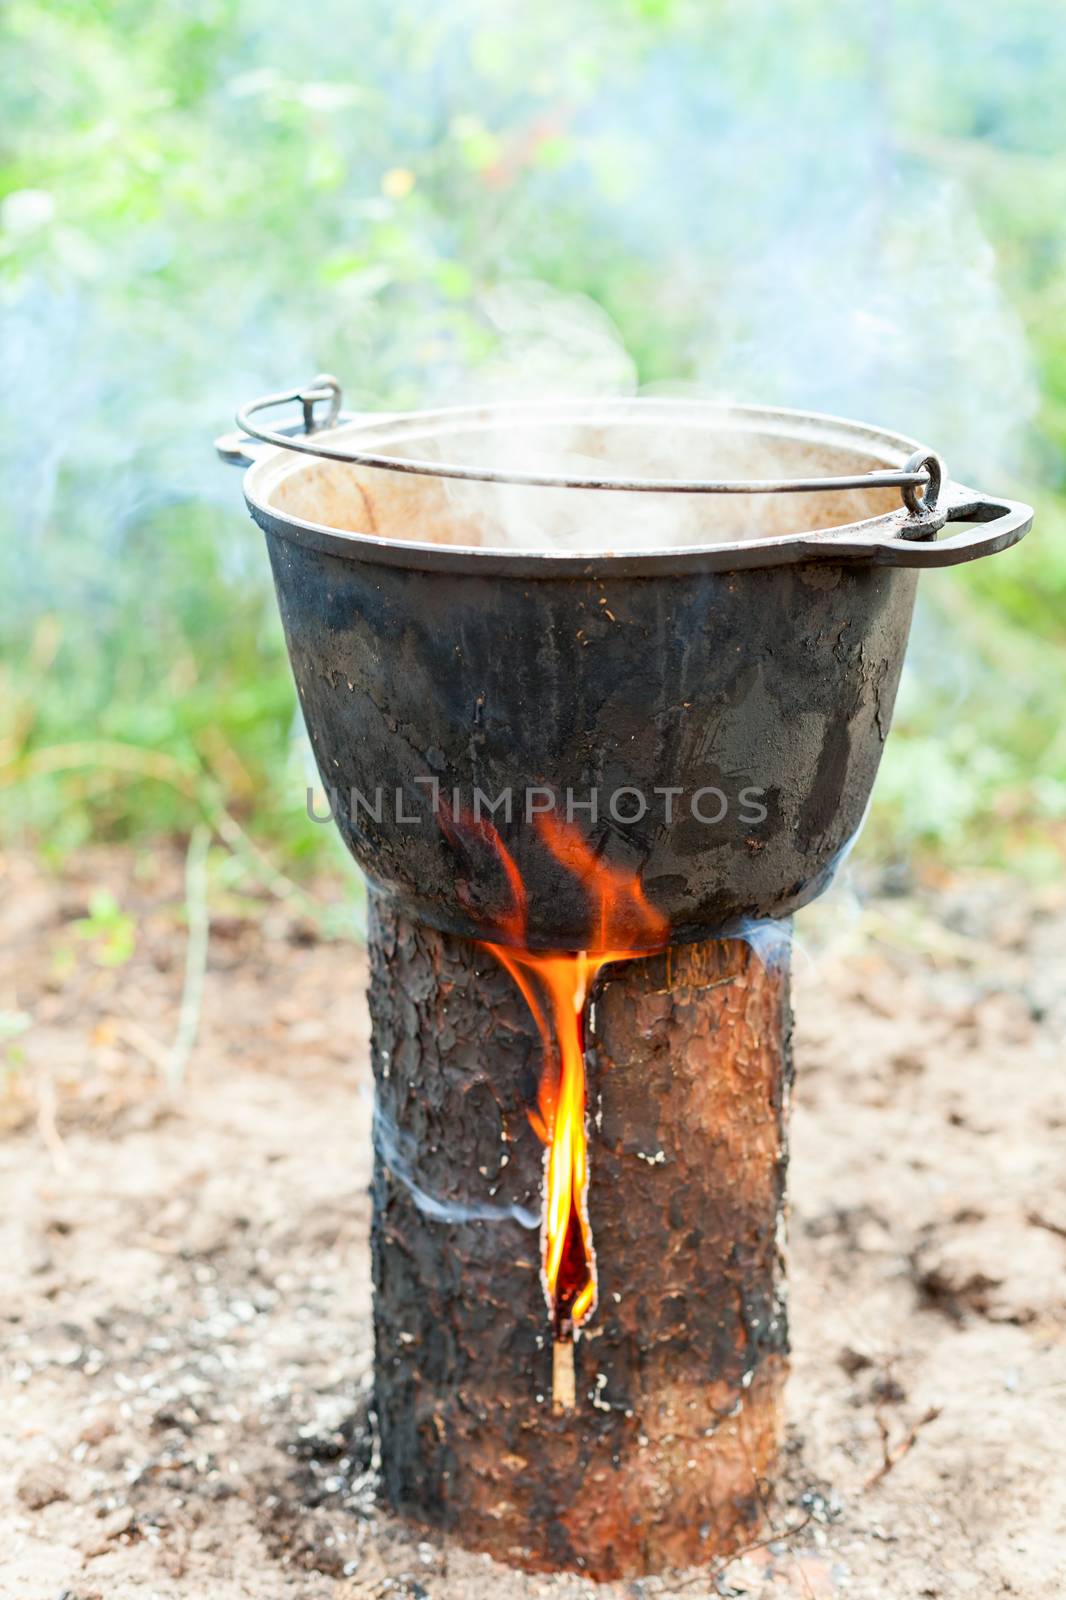 Cooking Goulash soup in cauldron on Finnish (Swedish) log stove